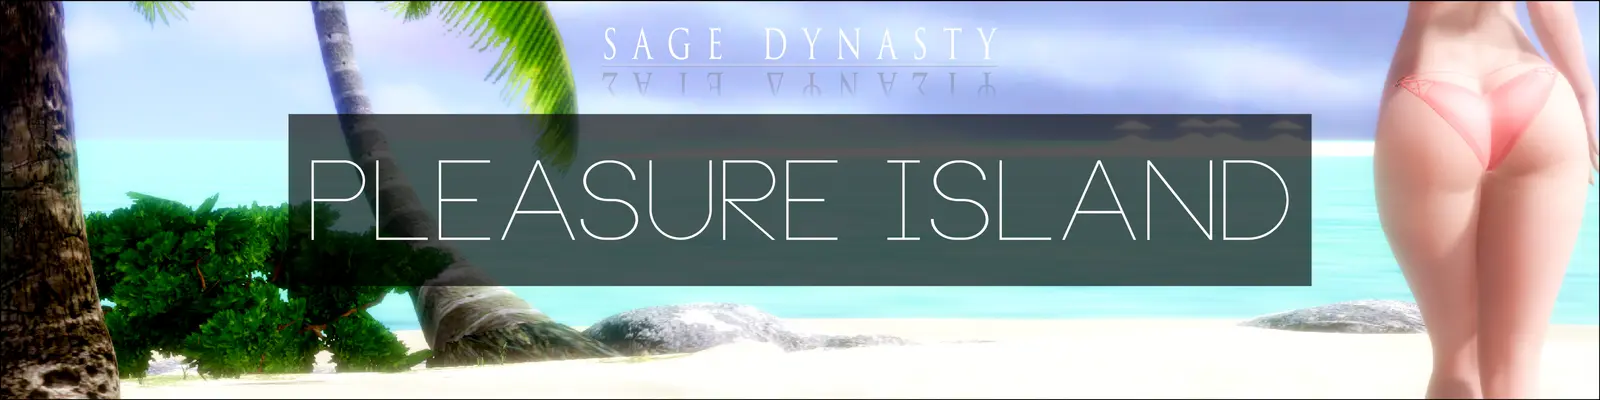 Sage Dynasty : Pleasure Island [v0.1b] main image